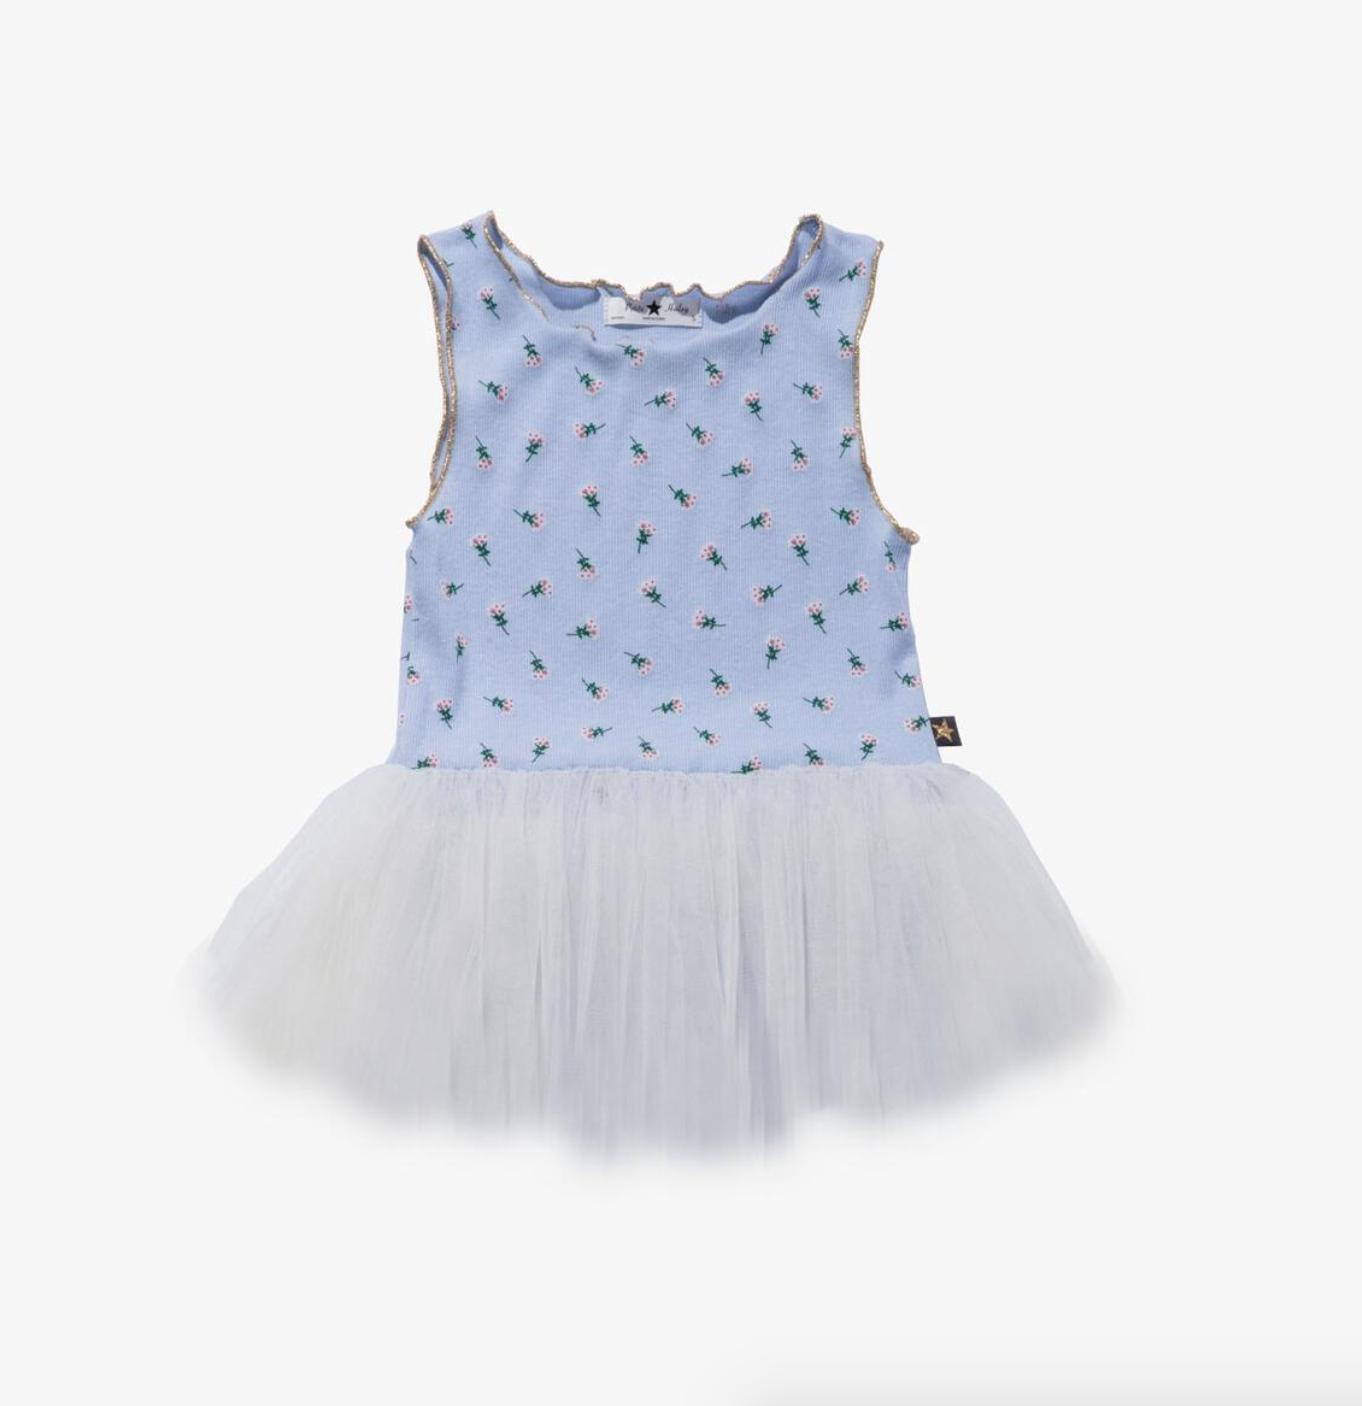 BABY VINTAGE FLOWER BLUE TUTU DRESS